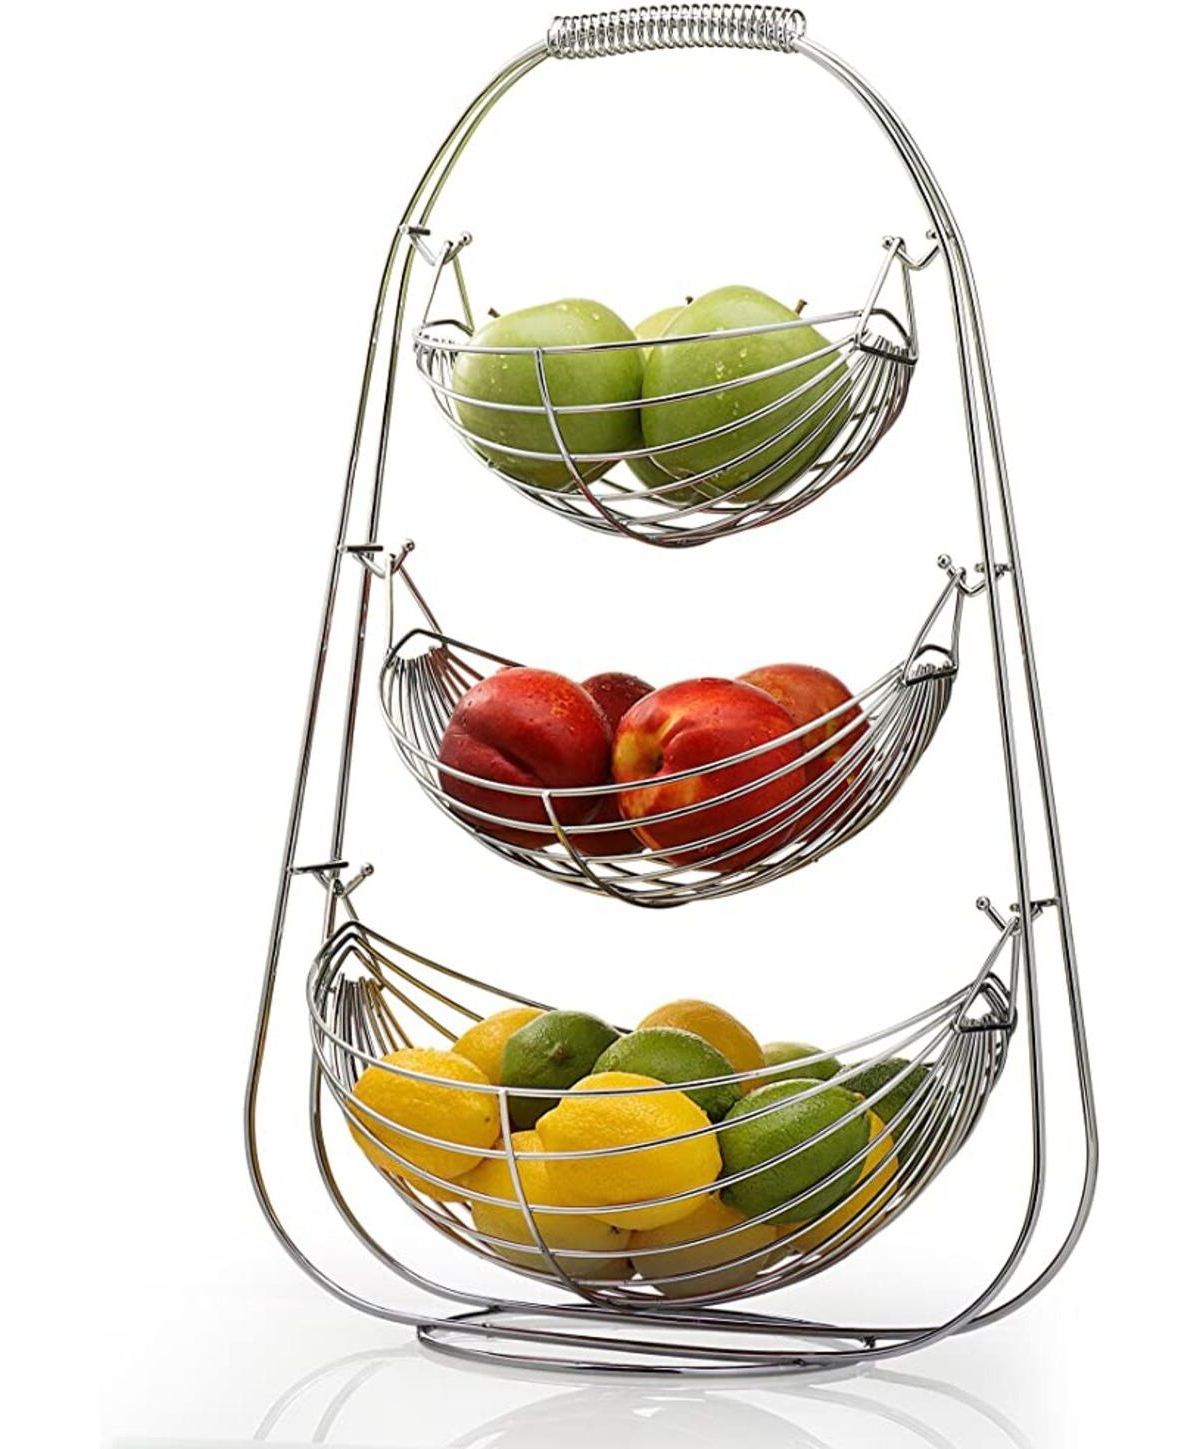 Homeitusa 3 Tier Fruit Basket In Silver